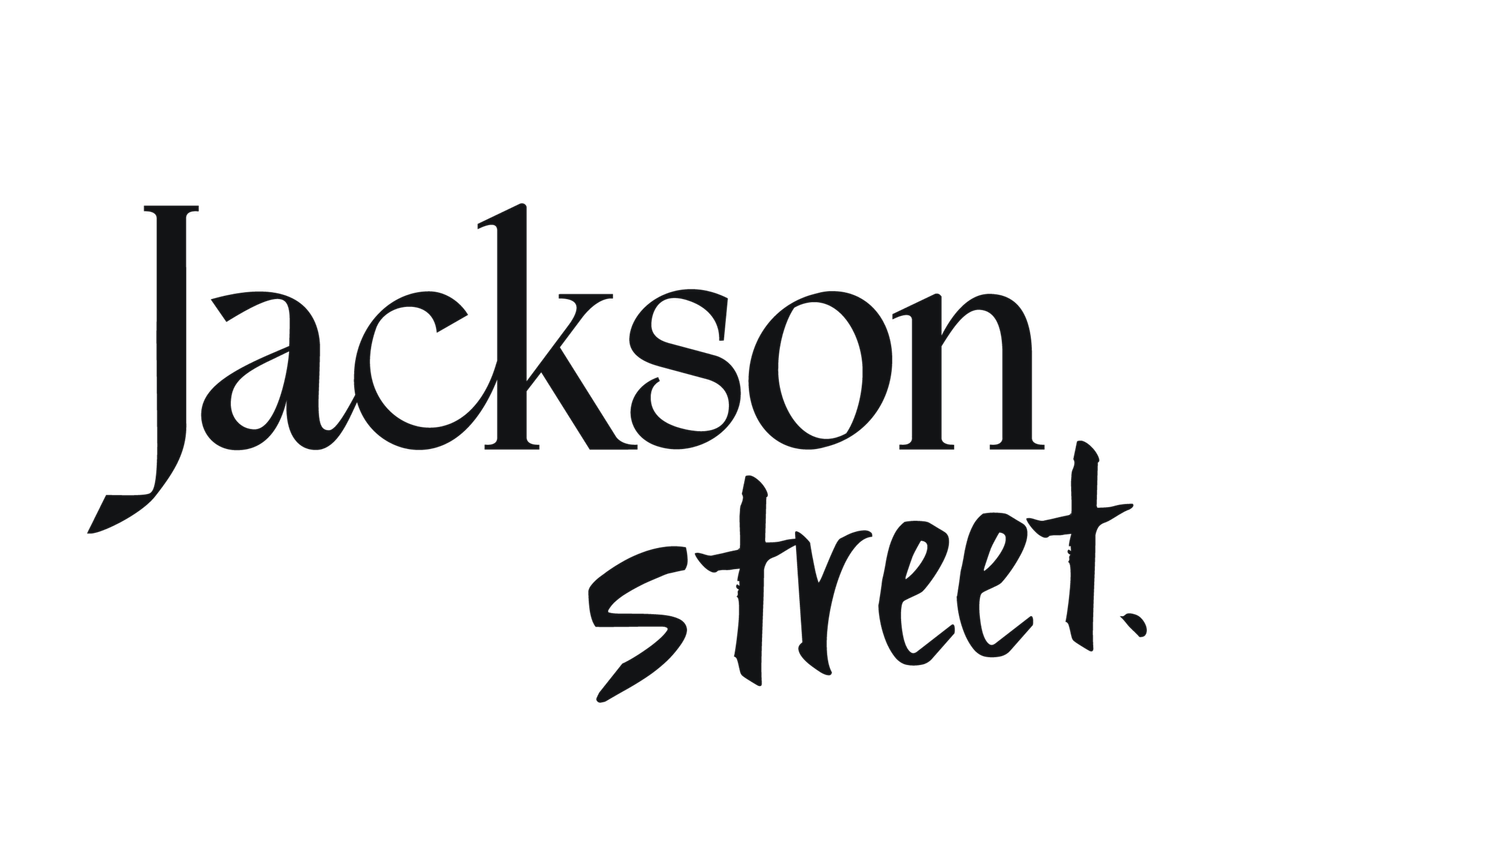 Jackson Street